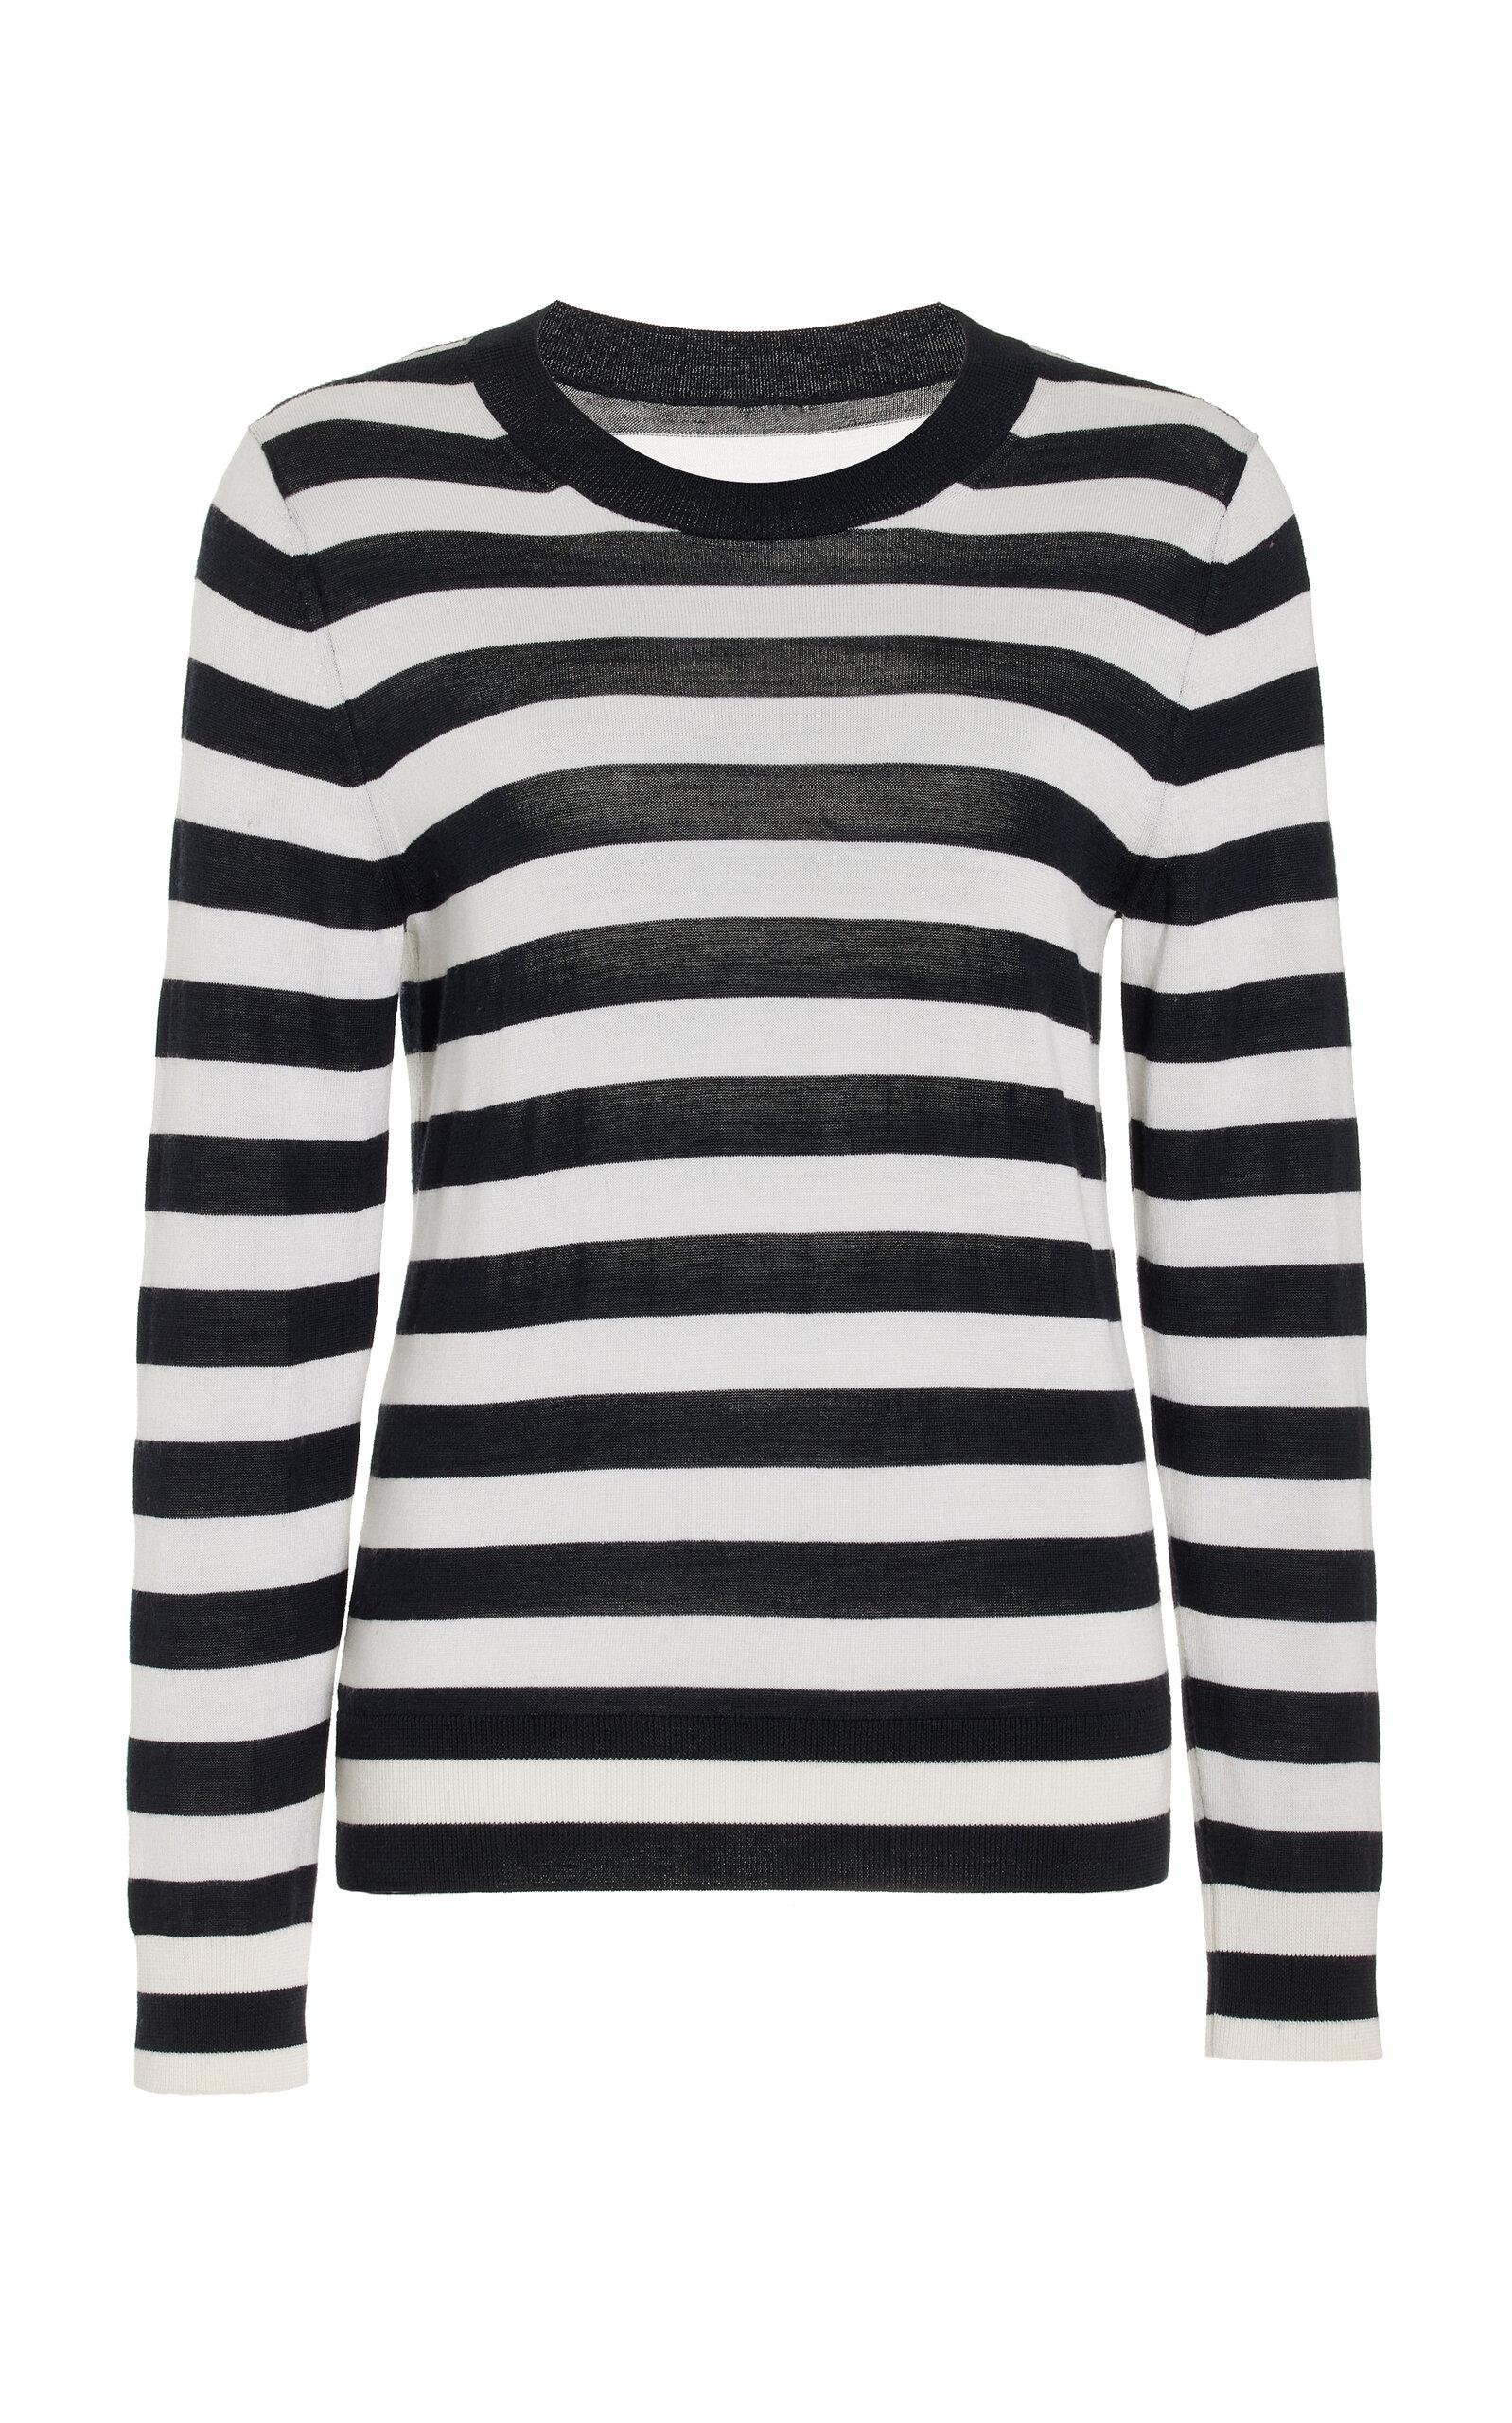 NILI LOTAN - Meir Merino Wool And Silk-Blend Sweater - Stripe - XL - Moda Operandi by NILI LOTAN